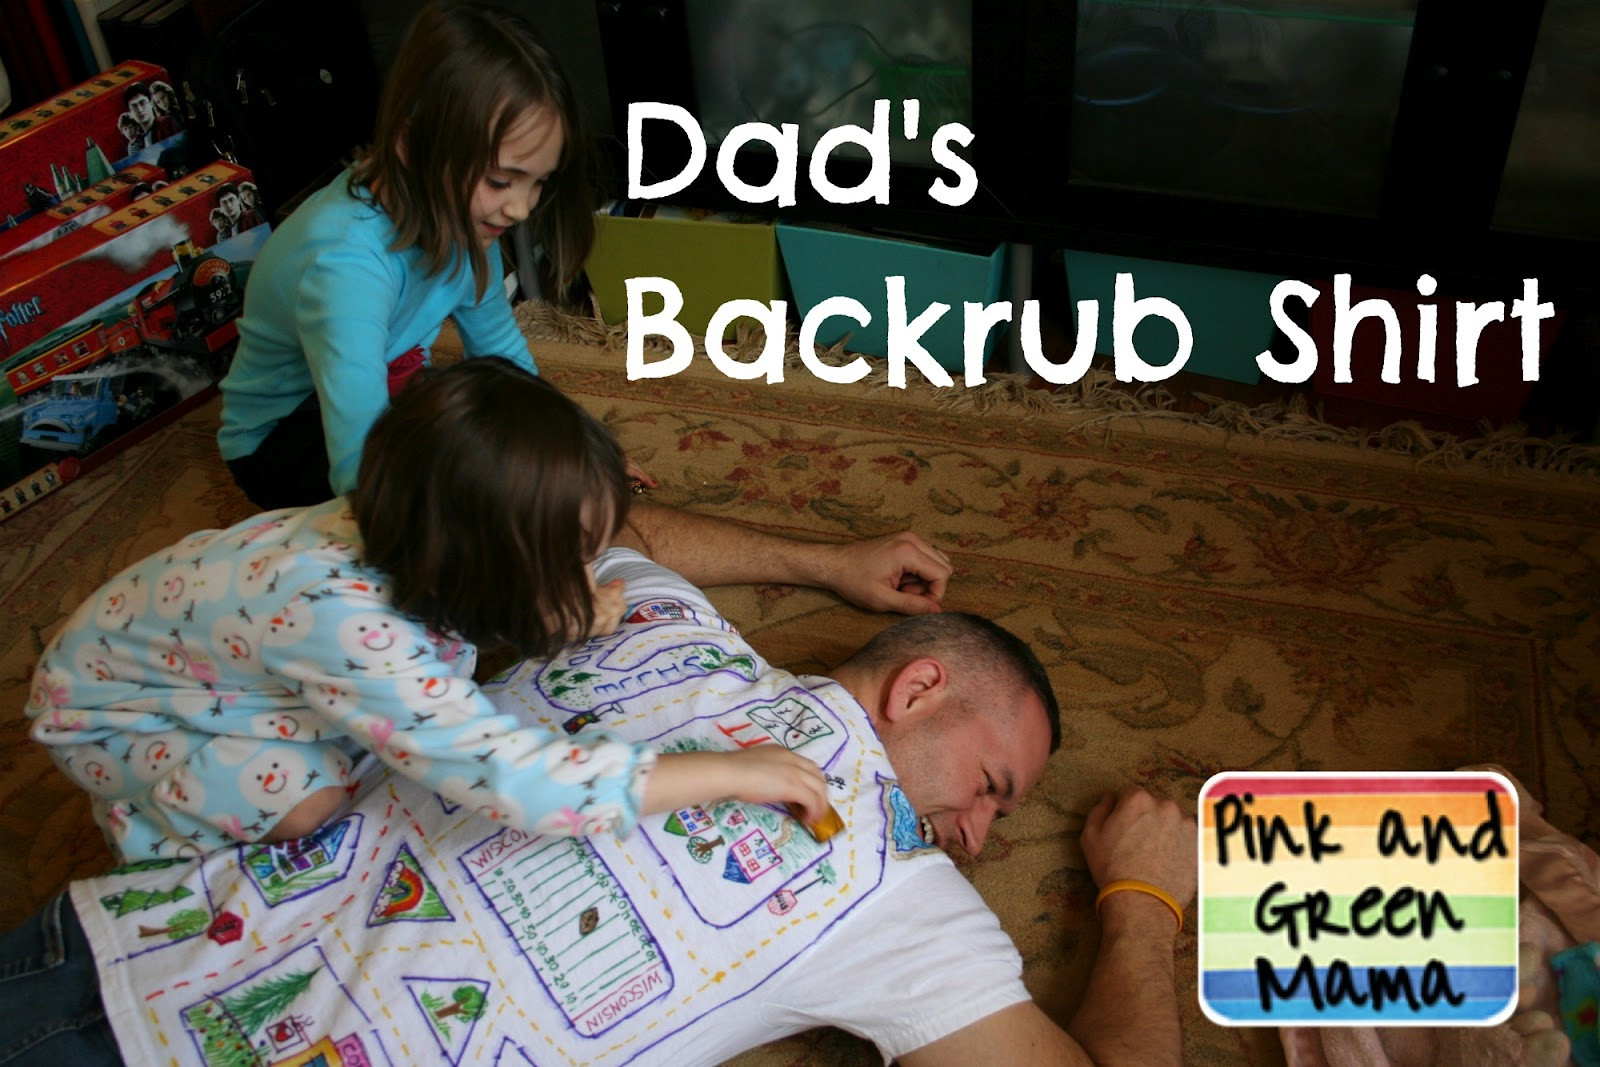 Dad is back. Backrub. Backrub логотип. Backrub Google. Homemade dad.